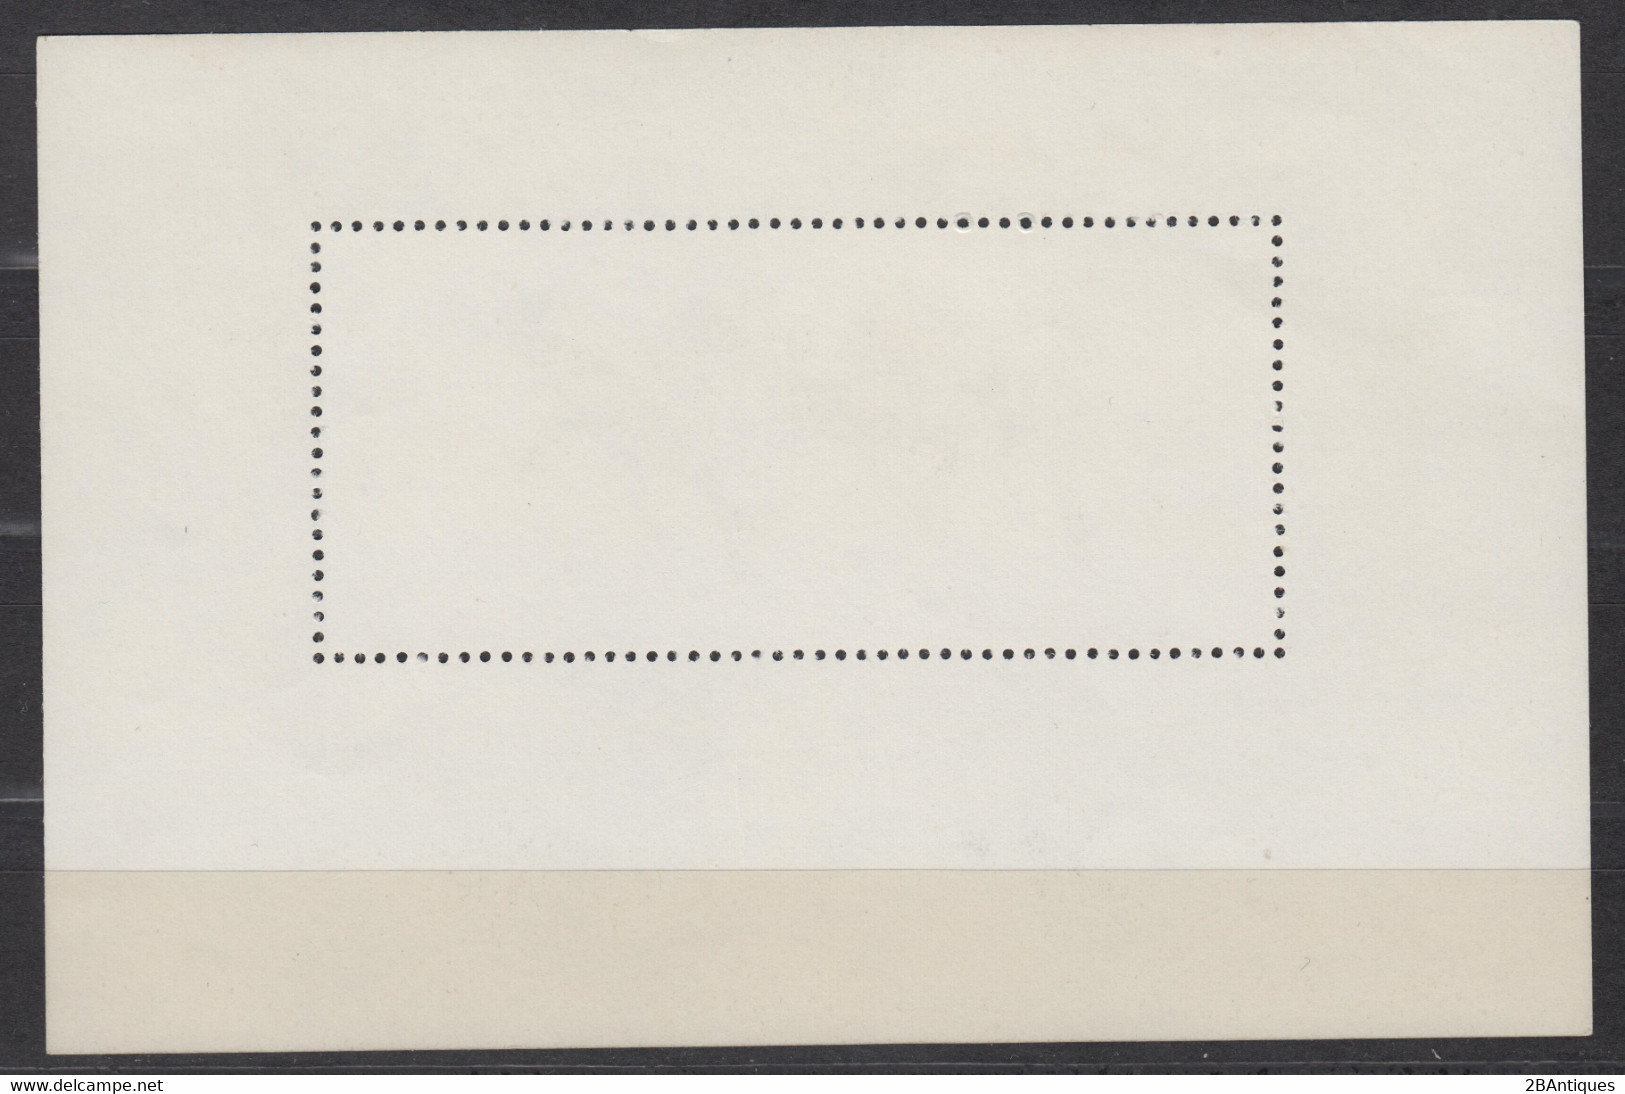 PR CHINA 1978 - Galloping Horses Minisheet Cinderella Stamp - Proofs & Reprints